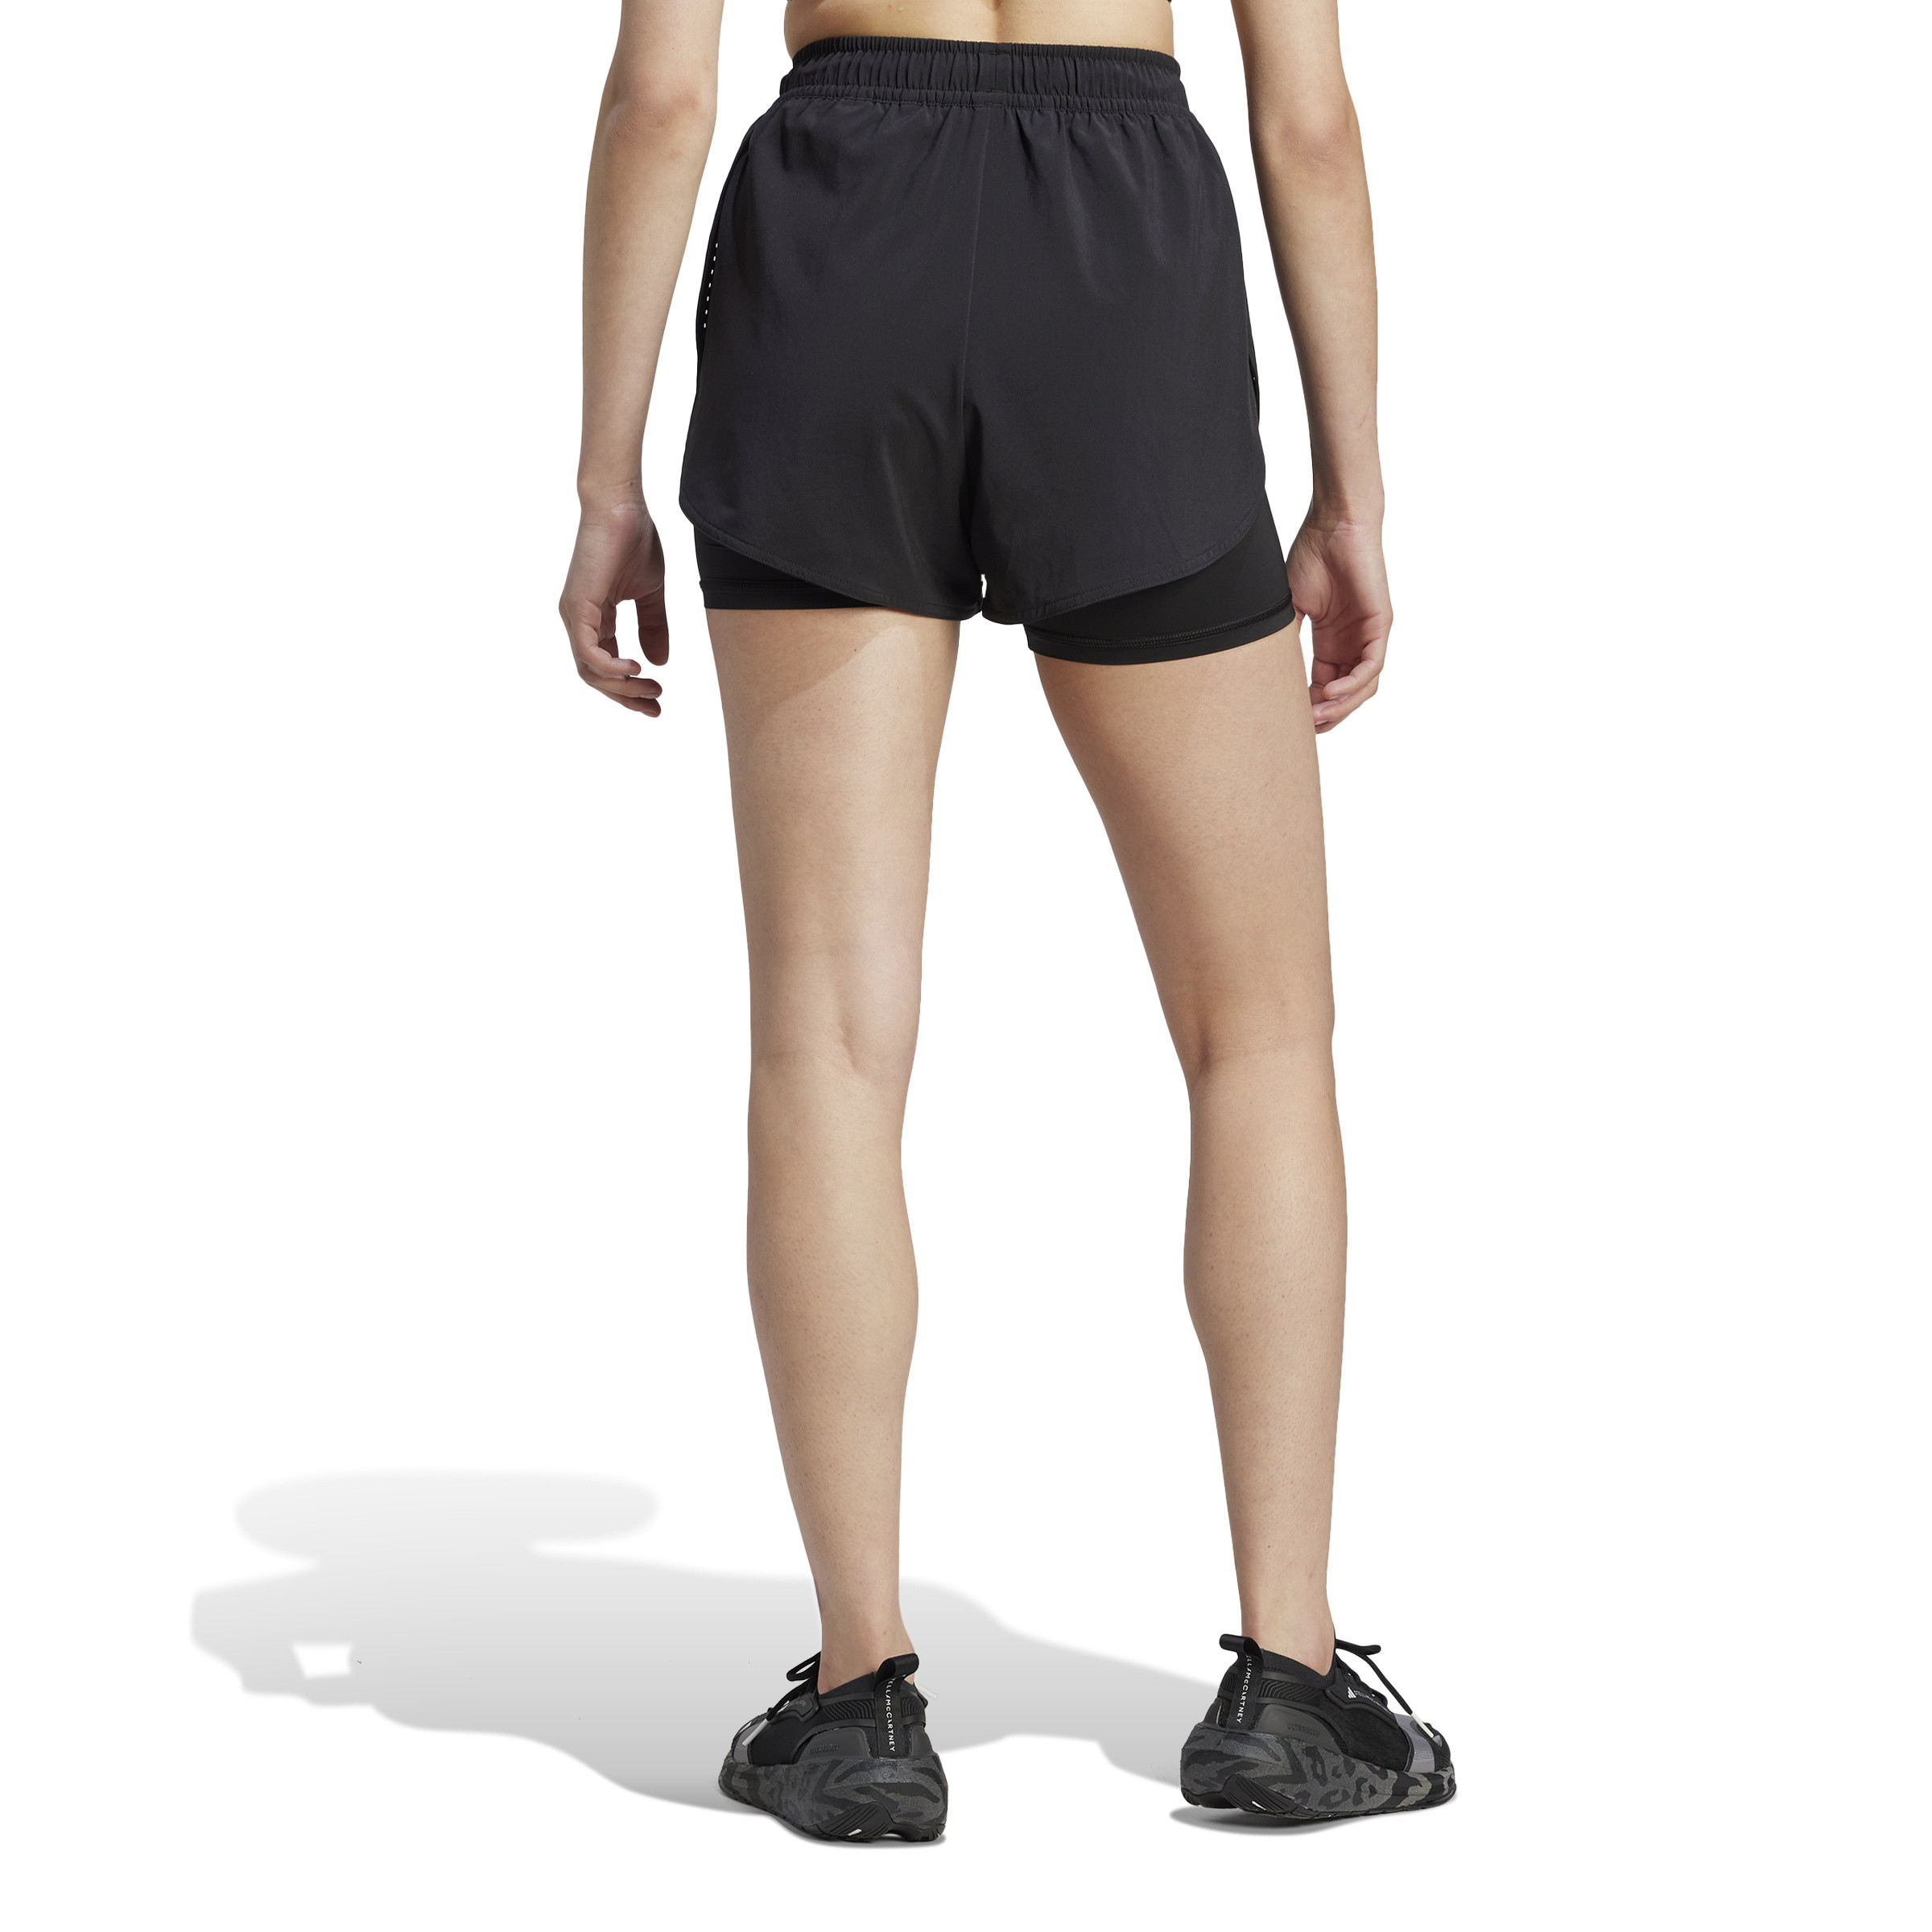 Adidas by Stella McCartney - TruePurpose 2-in-1 Training Shorts, Black, large image number 5